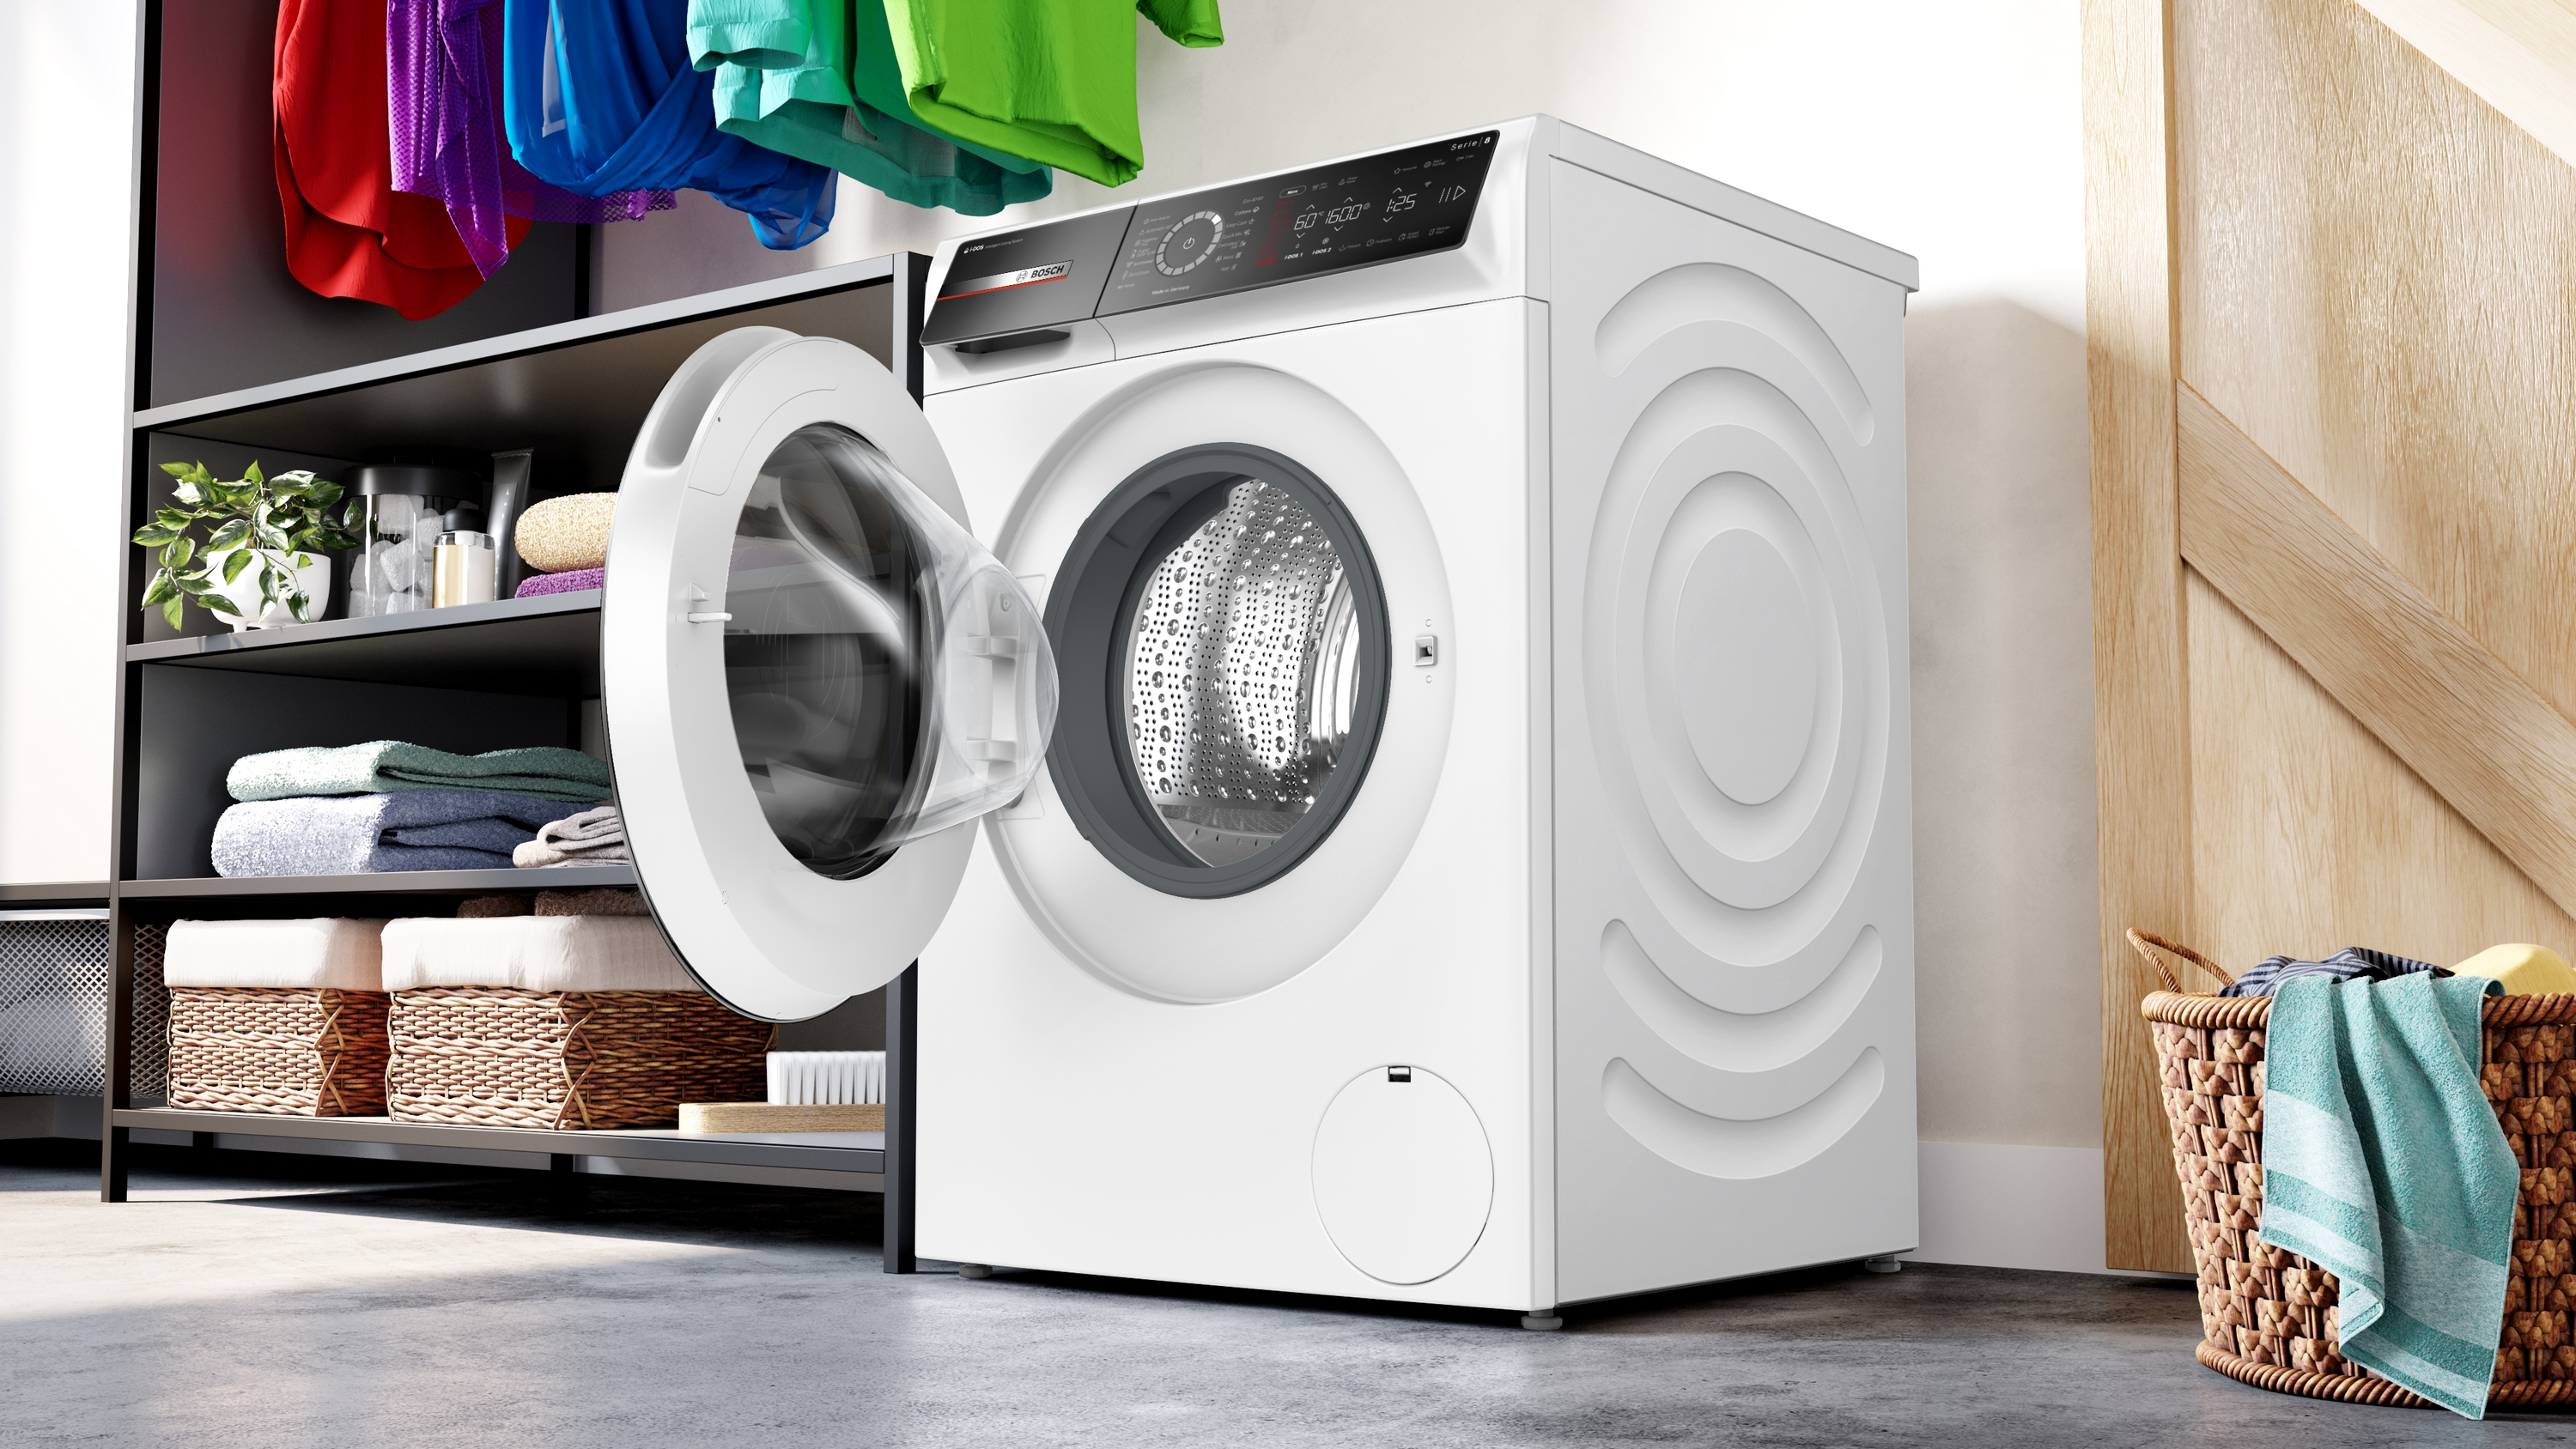 Serija 8, Mašina za pranje veša, punjenje spreda, 10 kg, 1600 okr, WGB256A0BY